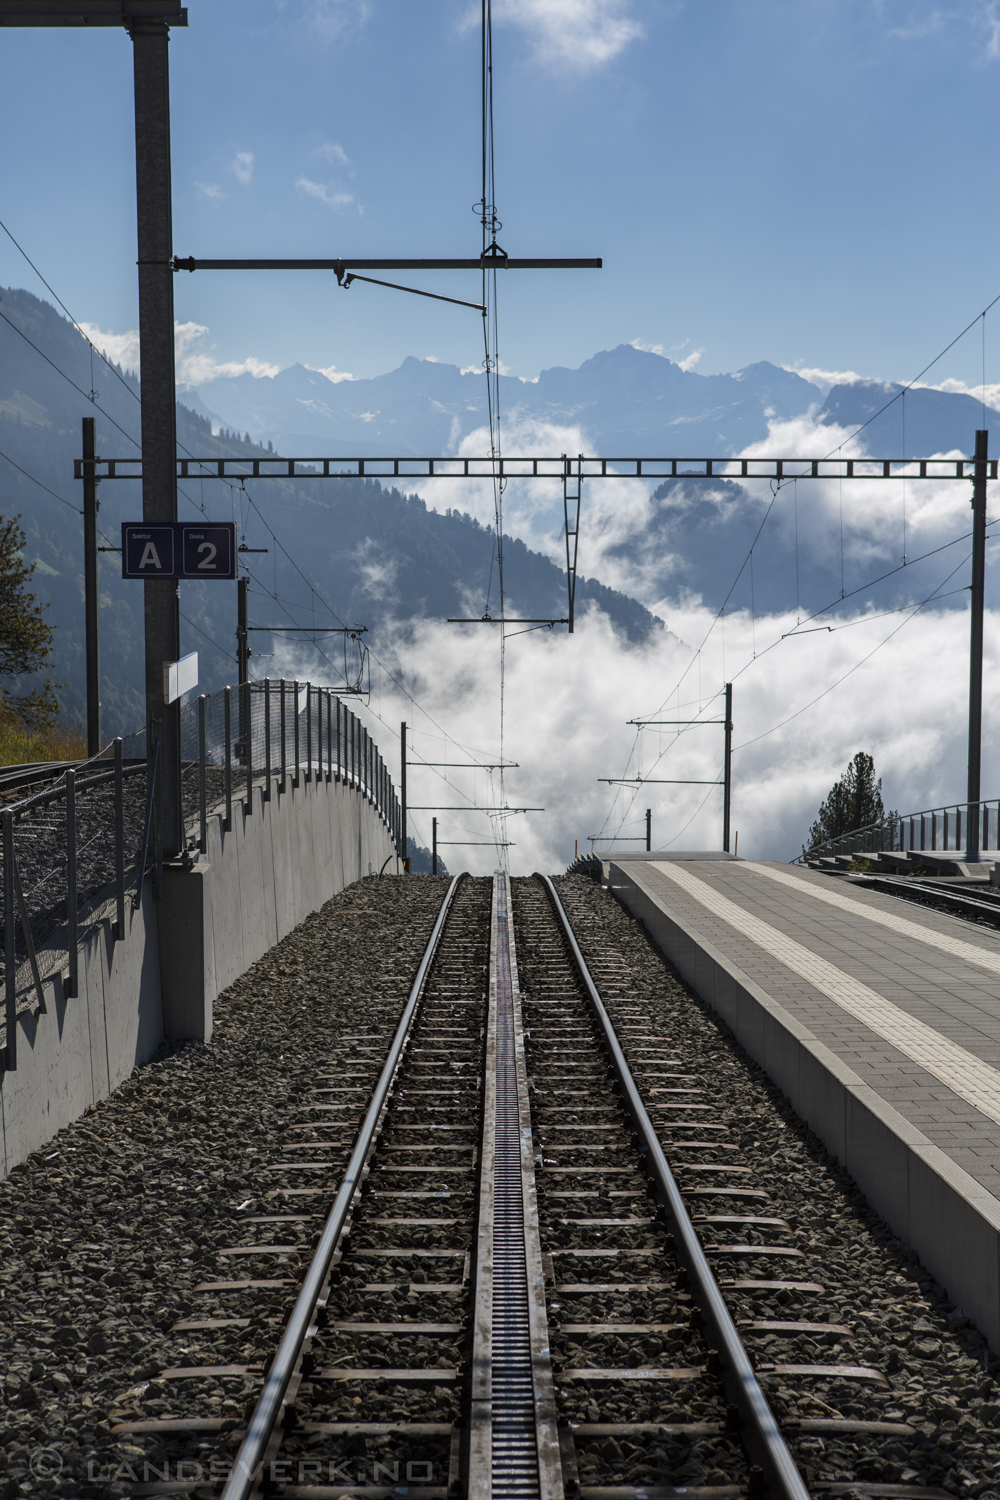 Rigi Kaltbad, Switzerland. 

(Canon EOS 5D Mark III / Canon EF 24-70mm f/2.8 L USM)